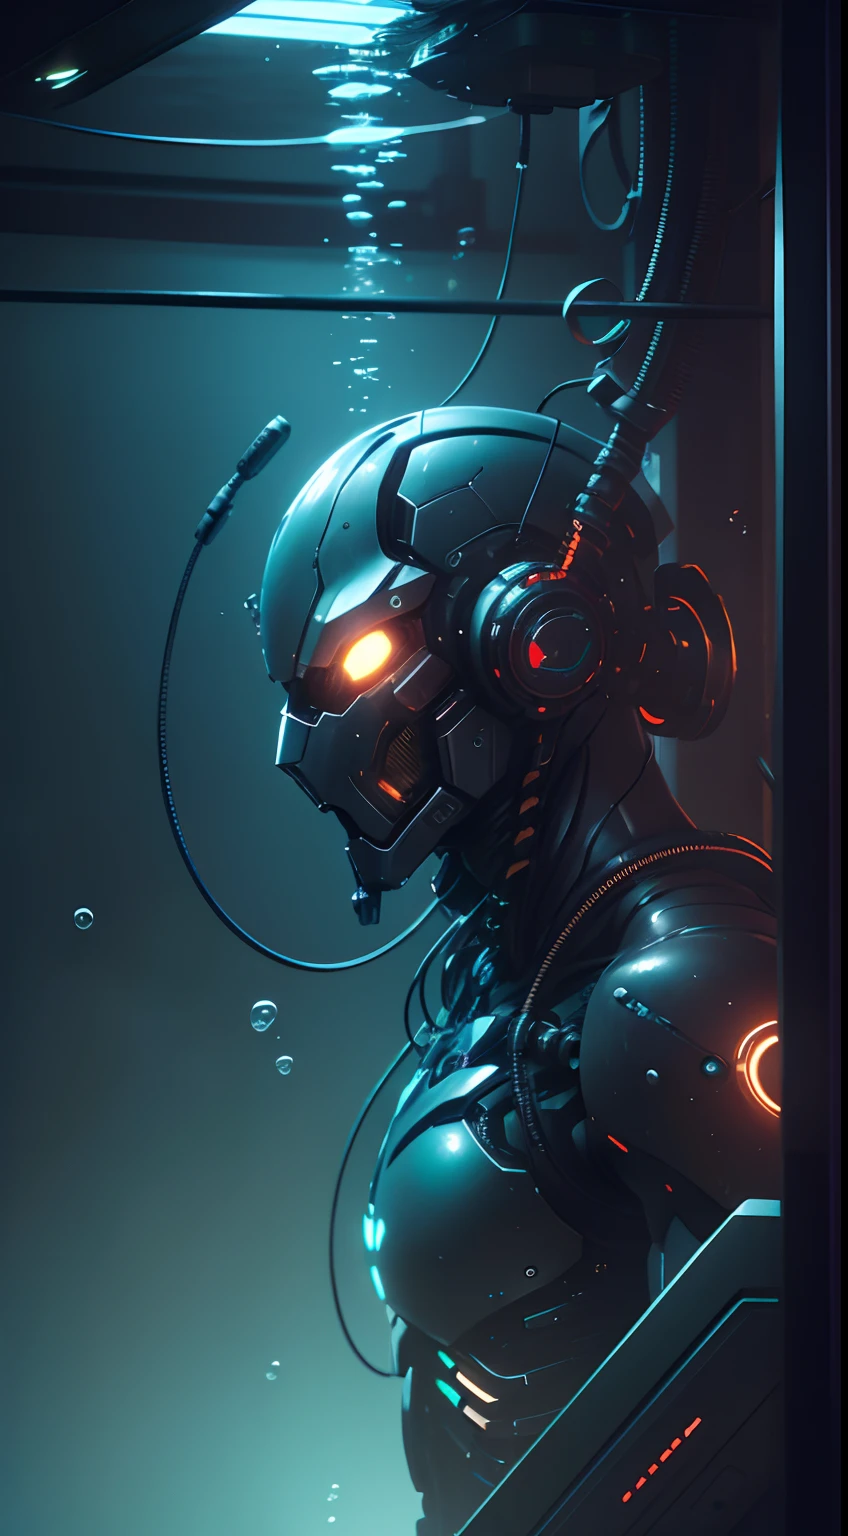 ((ผลงานชิ้นเอก)), ultra detailed cg render of a cyborg suspended by สายไฟ, หุ่นยนต์ชาย , (ใต้น้ำ:1.3), ใกล้ชิด, ช่างกล, แขนกล, สไตล์ไซเบอร์พังค์, เทคโนโลยี, มืด, ภาพสะท้อน, การกระเจิงผิวเผิน, 8ก, ไอ้เหี้ย, โรงภาพยนตร์, ดวงตาที่เร่าร้อน,หัวโลหะ, ไฟบนหน้าอก, สายไฟ, หลอด, สายไฟ coming out the cyborg, แสงนีออน, บรรยากาศที่เป็นลางไม่ดี, ฟองอากาศ, (ซับซ้อน), ยูเอชดี, อย่างละเอียดในที่สุด, ความละเอียดสูง, เหมือนจริง, วอลล์เปเปอร์, ไซเบอร์เทค, แสงที่น่าทึ่ง, อันตรายที่รออยู่, ชีวิตประดิษฐ์,ผิดจรรยาบรรณ, น่ากลัว, สยองขวัญ. แข็งแกร่ง, ถังเพาะปลูก, ใต้น้ำ,